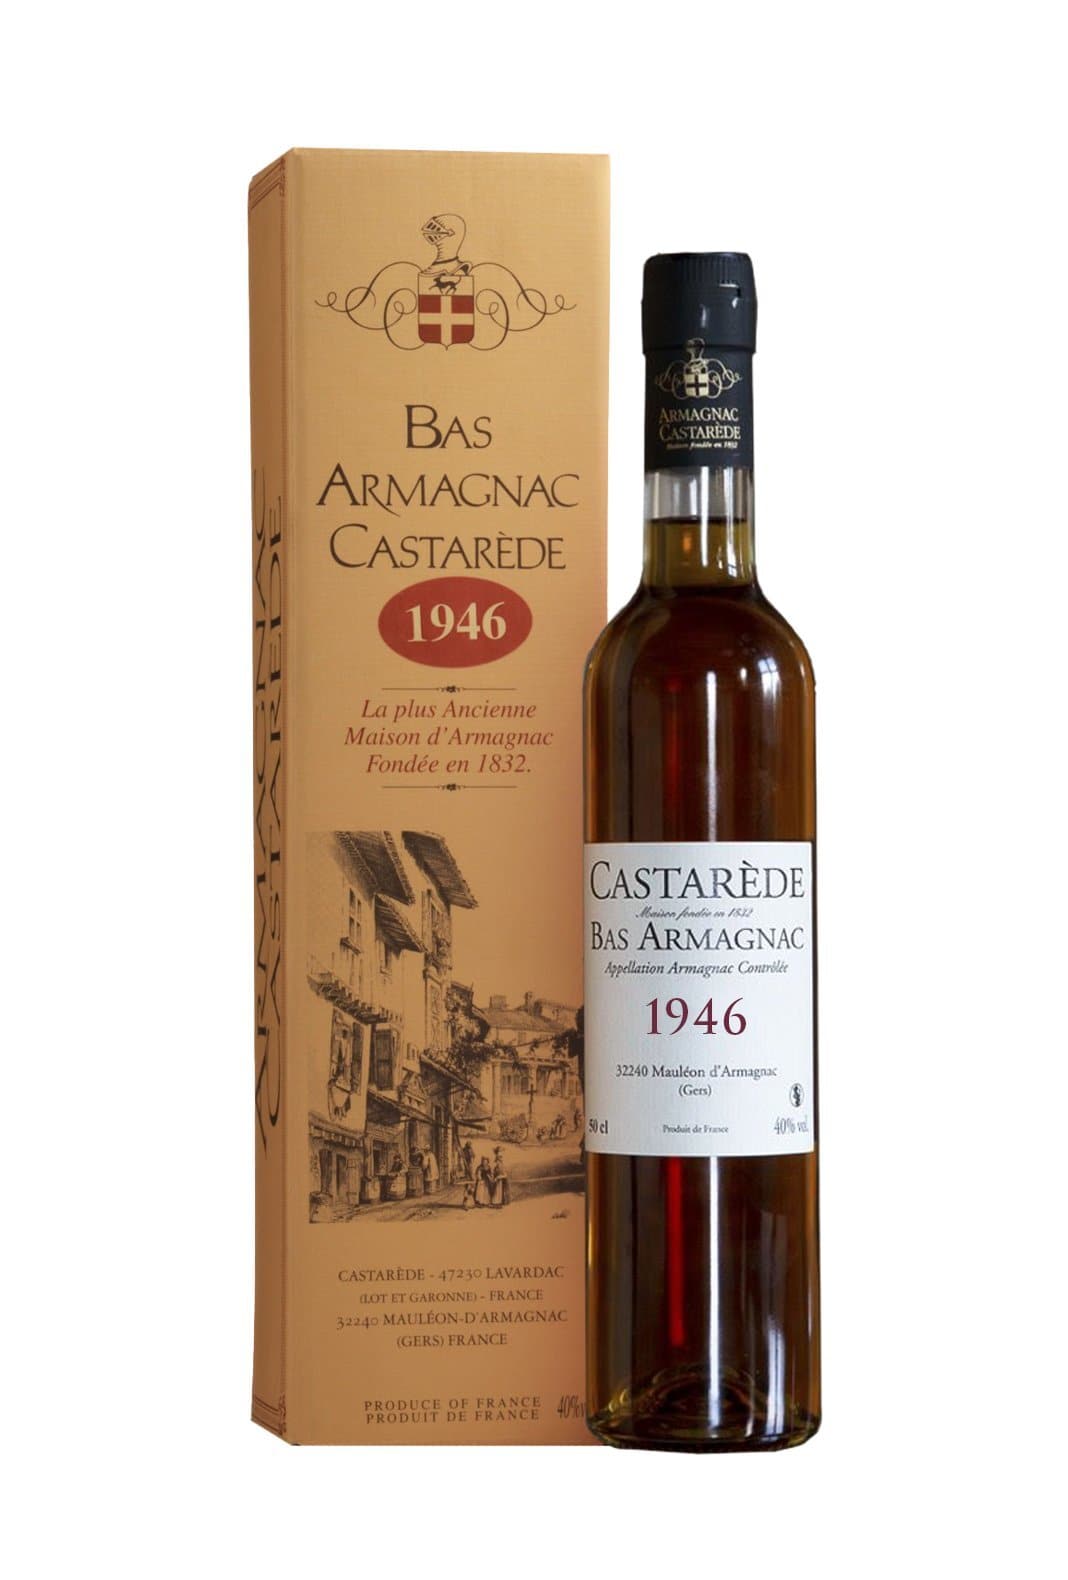 Castarede 1946 Armagnac 40% 500ml | Brandy | Shop online at Spirits of France